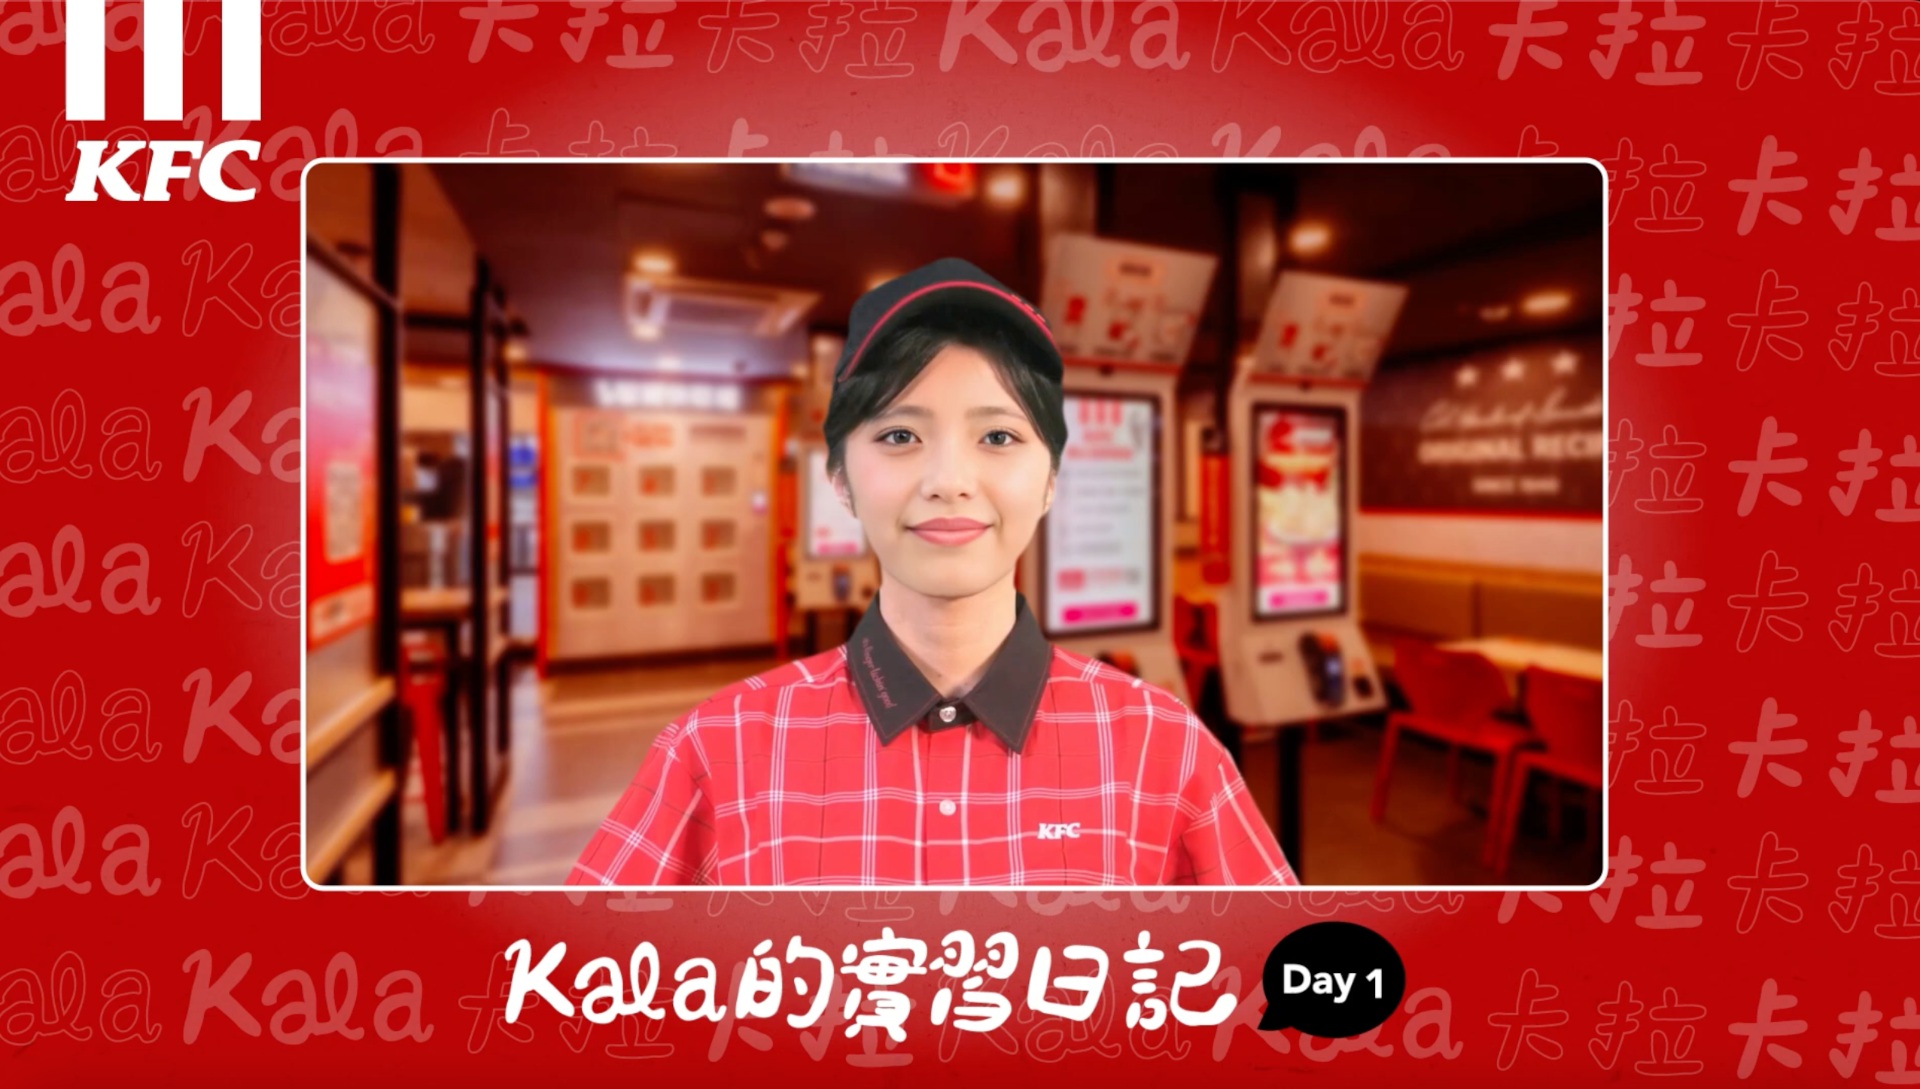 KFC Taiwan Restaurant 2.0 with Kala AI Digital Human (Image: KFC Taiwan)